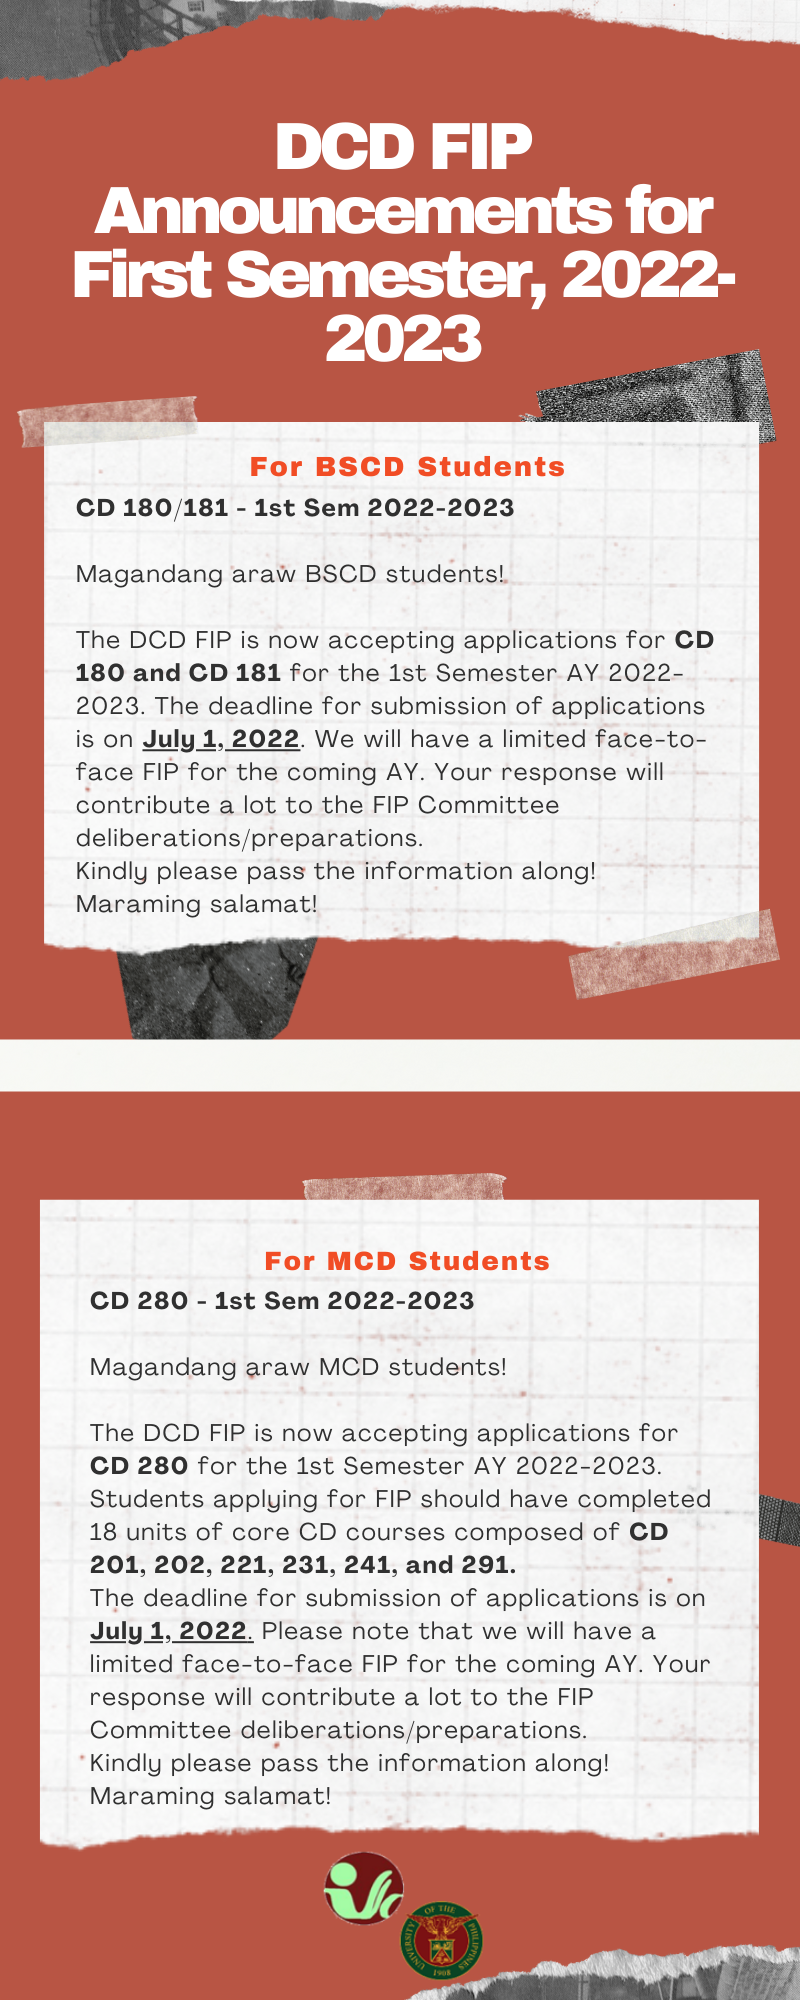 dcd_fip_announcements_for_first_semester_2022-2023